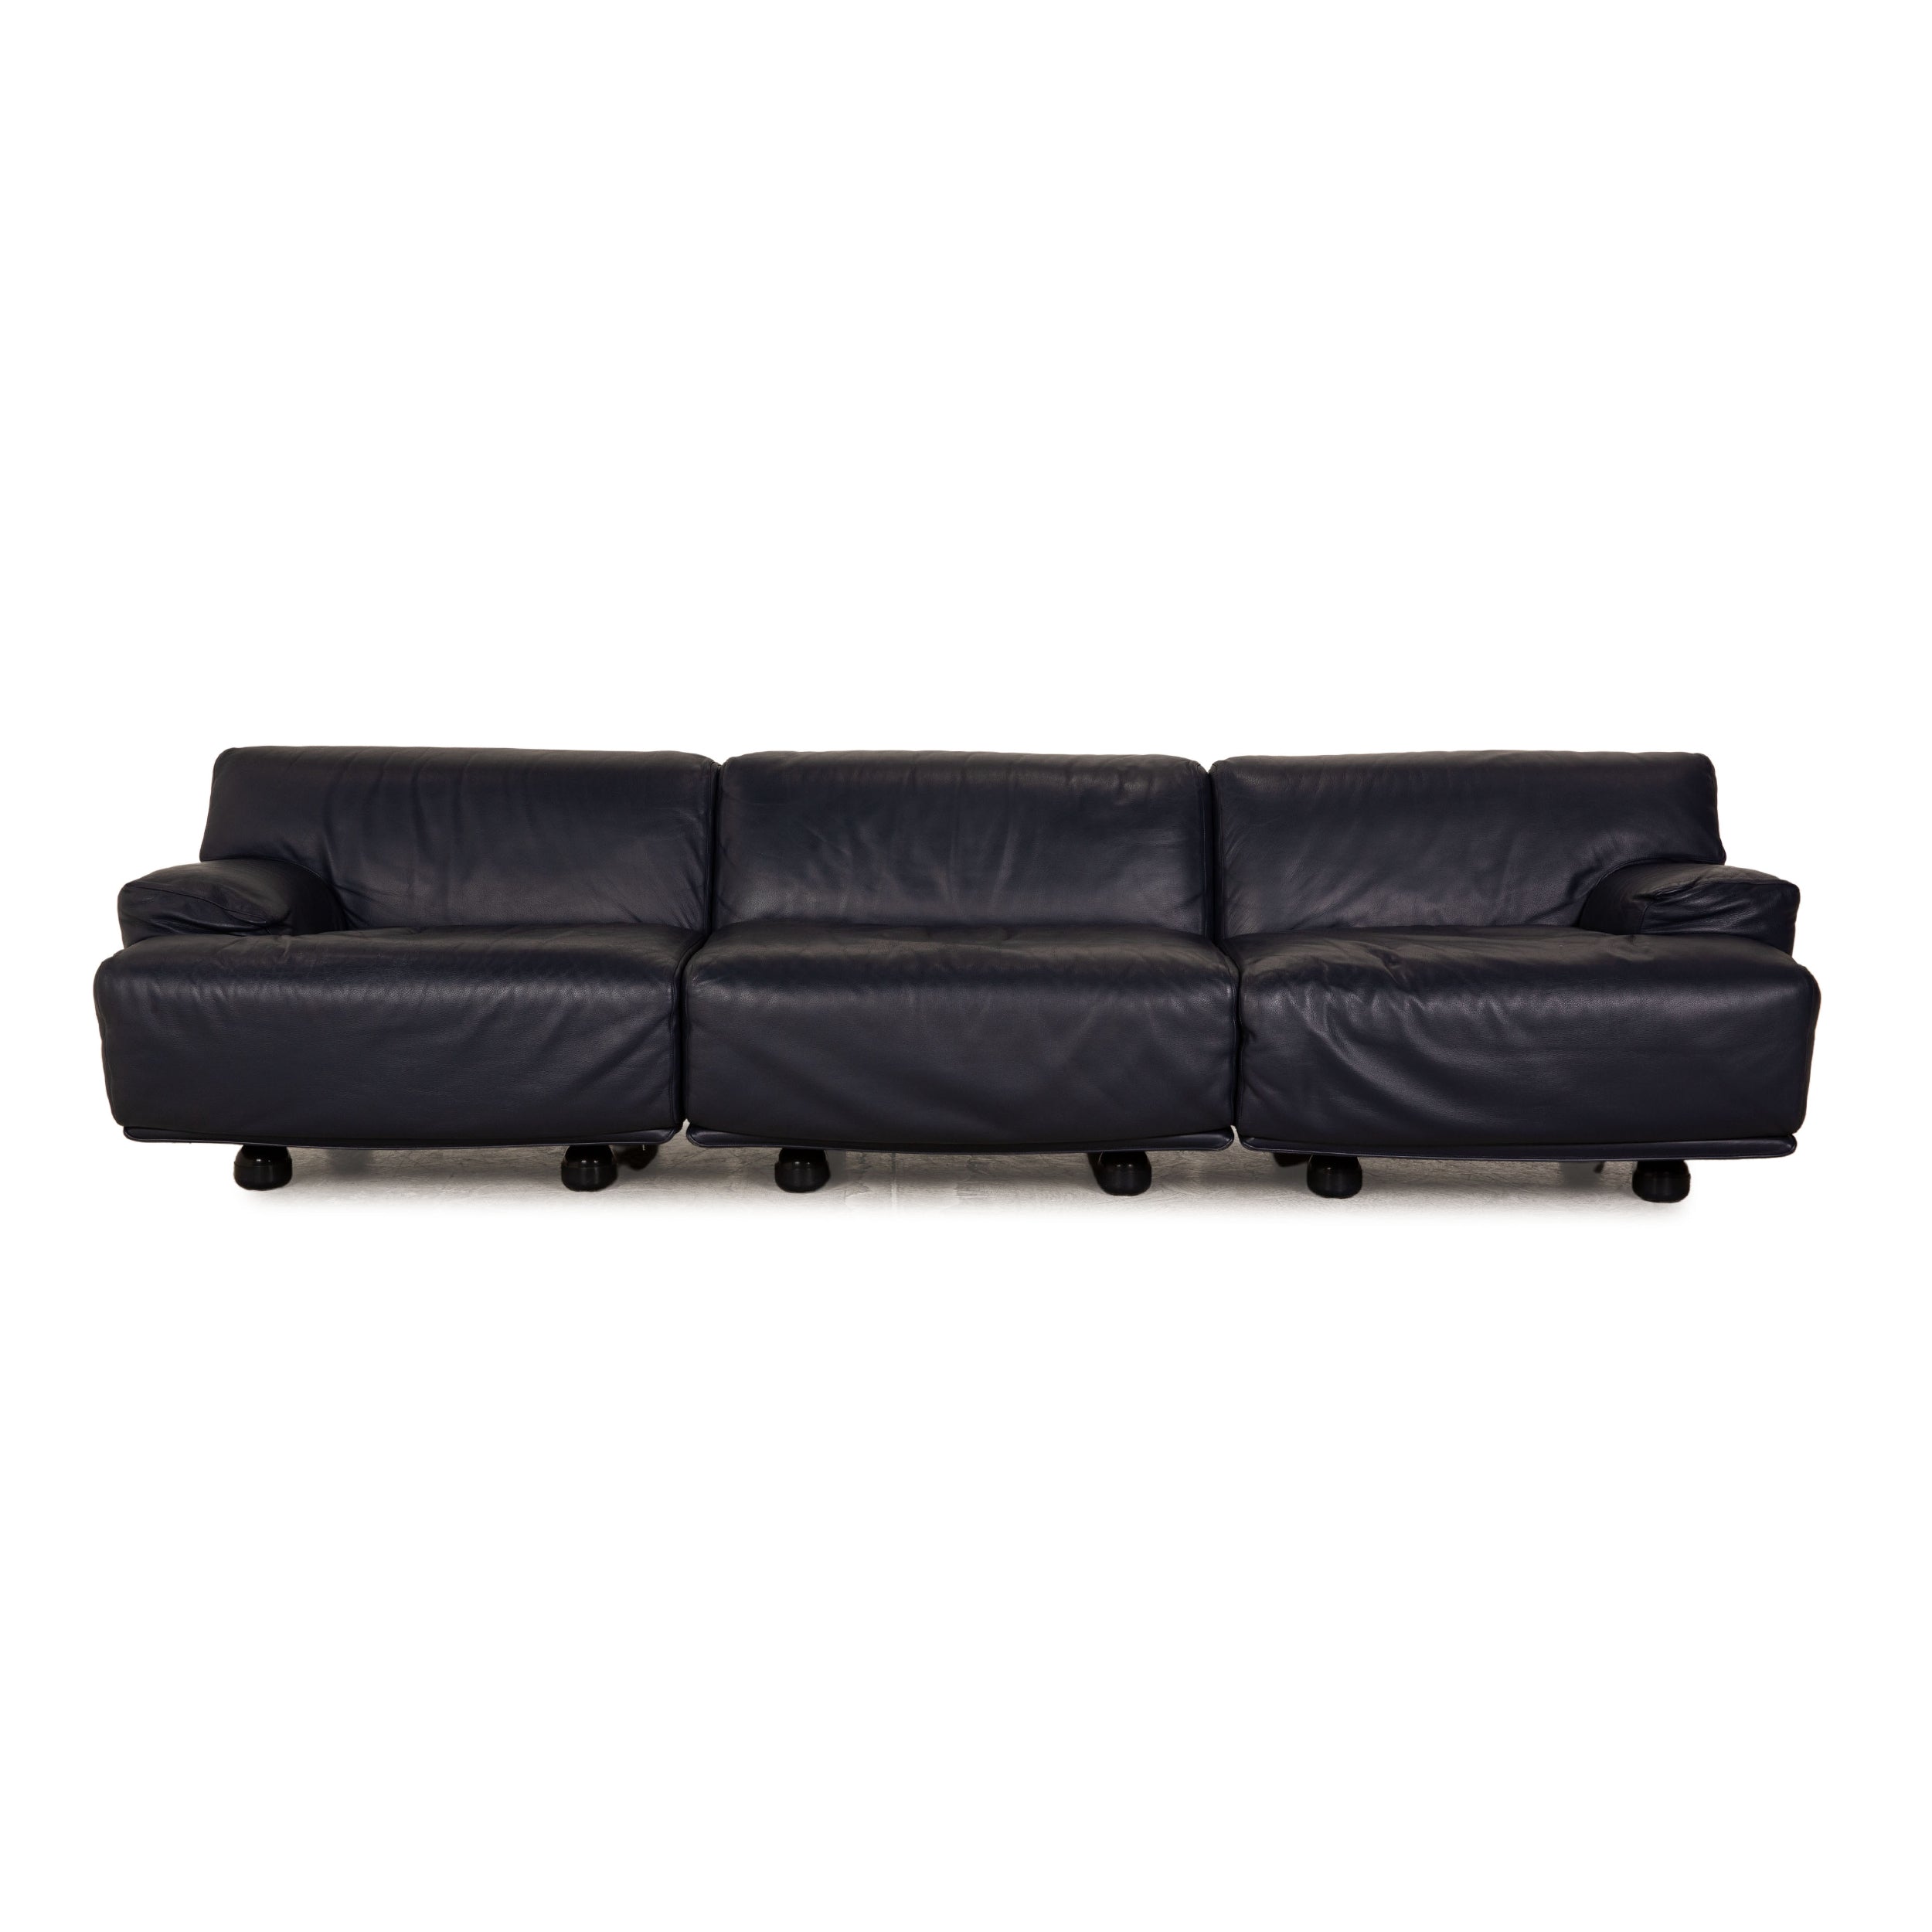 Cassina Fiandra Leather Three Seater Blue Dark Blue Sofa Couch